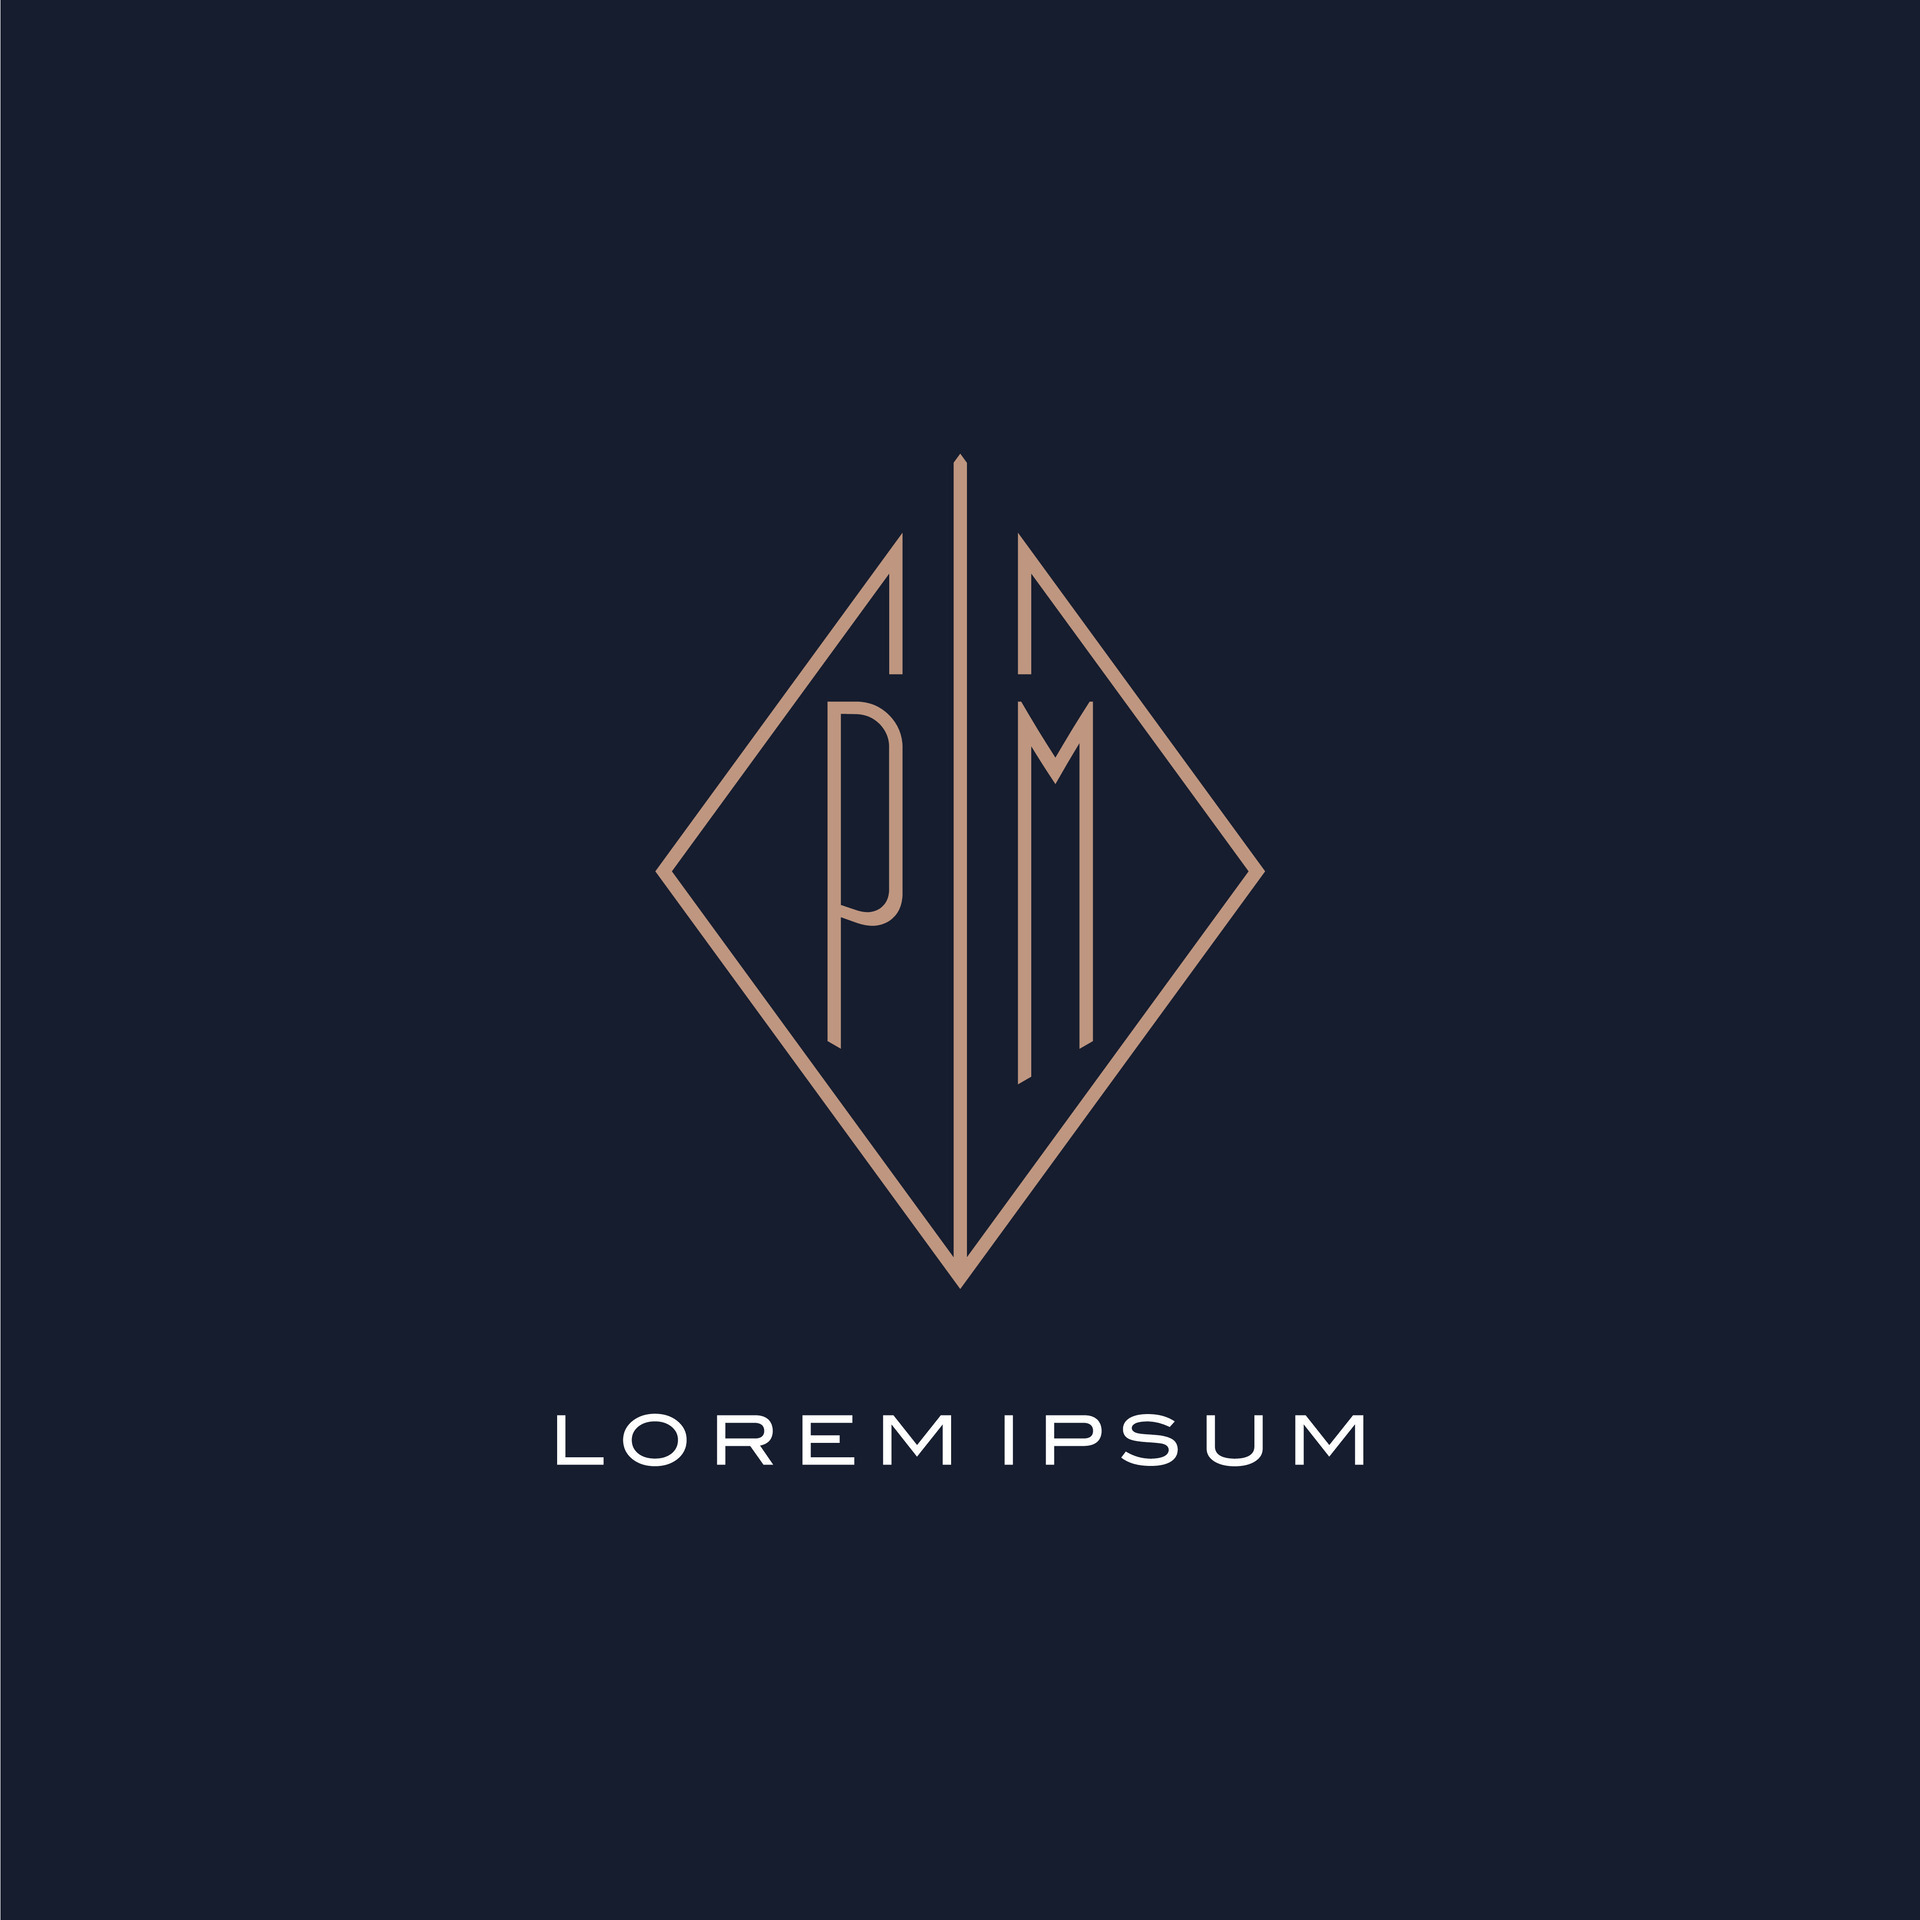 Monogram PM logo with diamond rhombus style, Luxury modern logo